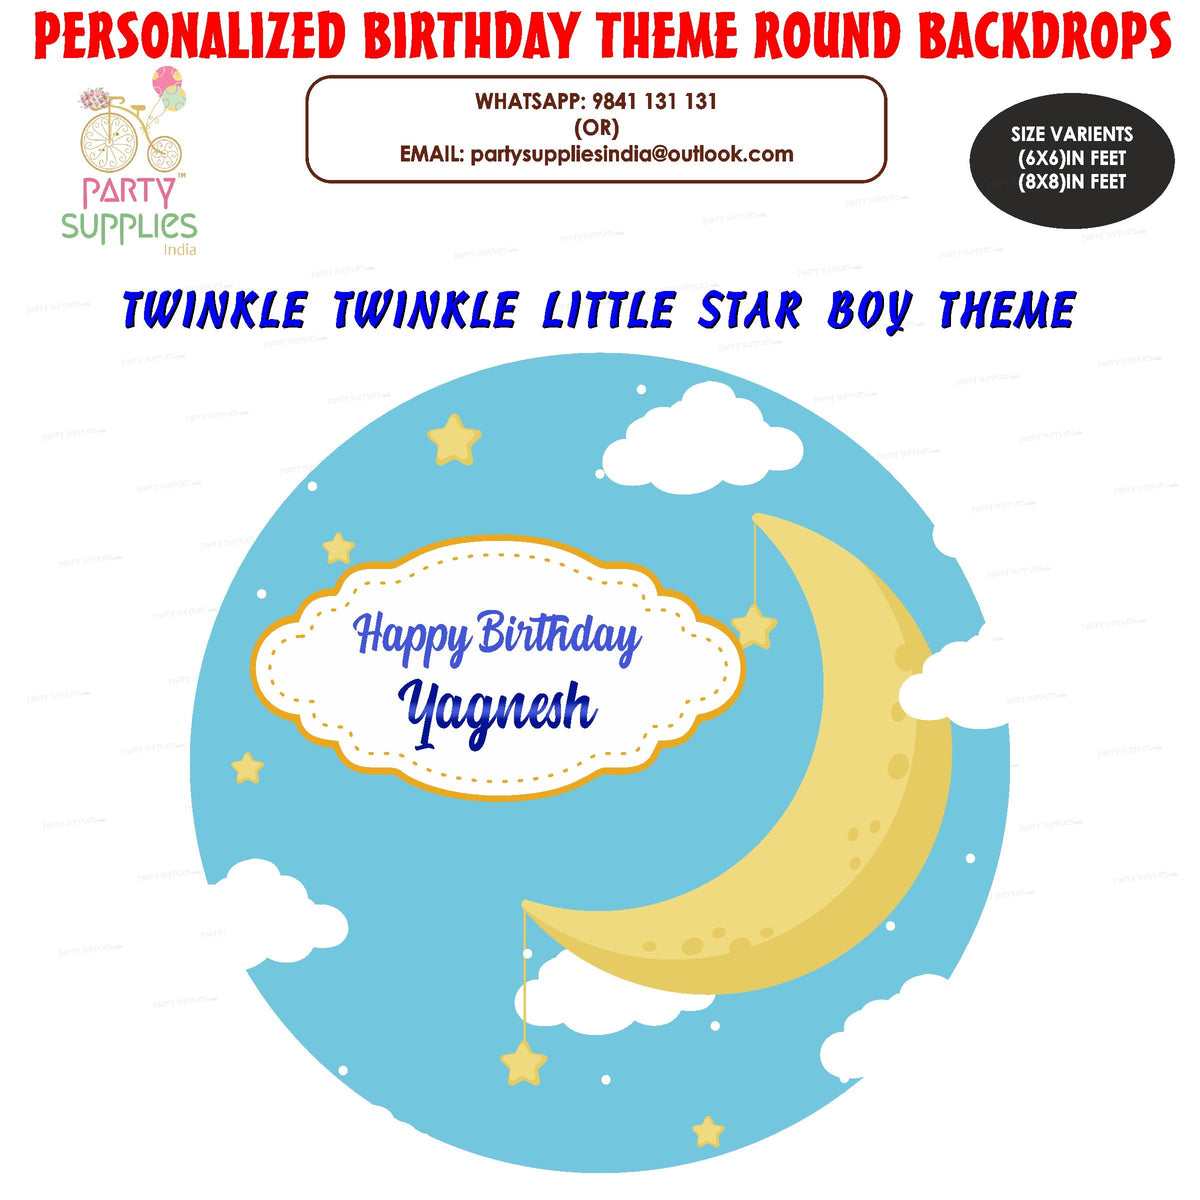 PSI Twinkle Twinkle Little Star Boy Theme Customized Round Backdrop